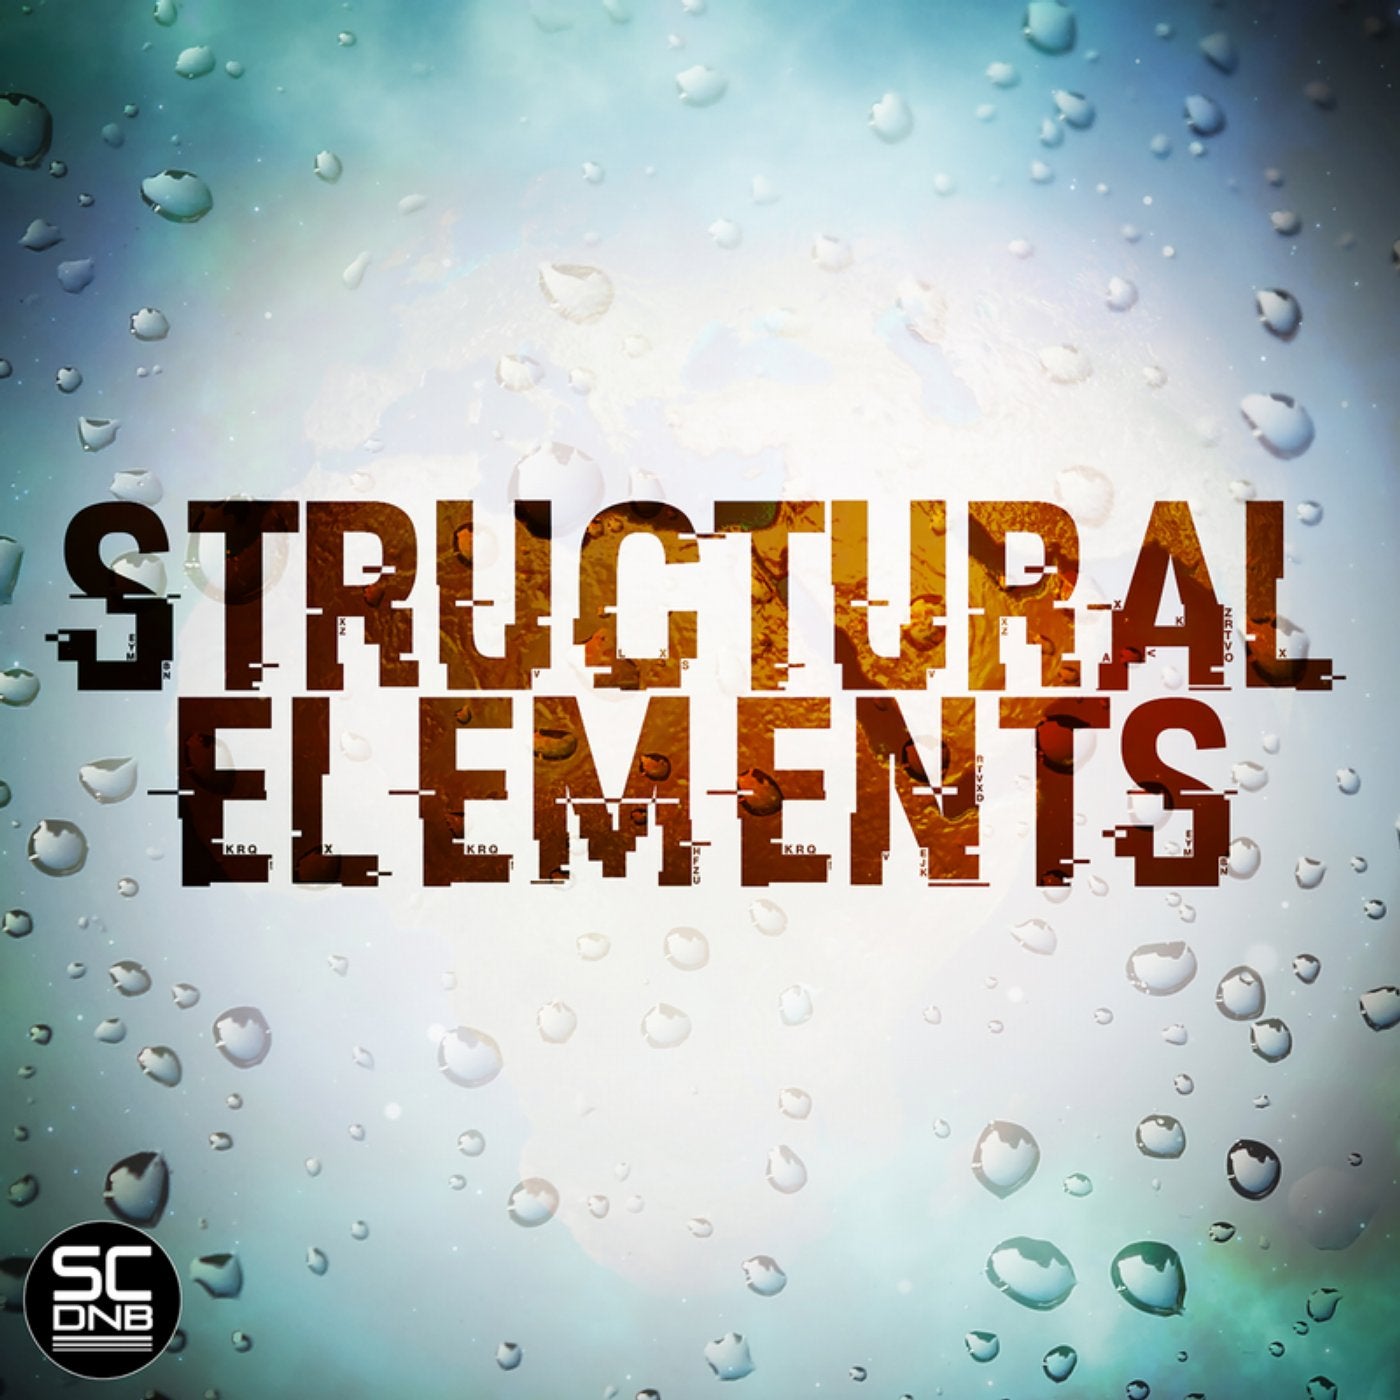 Structural Elements